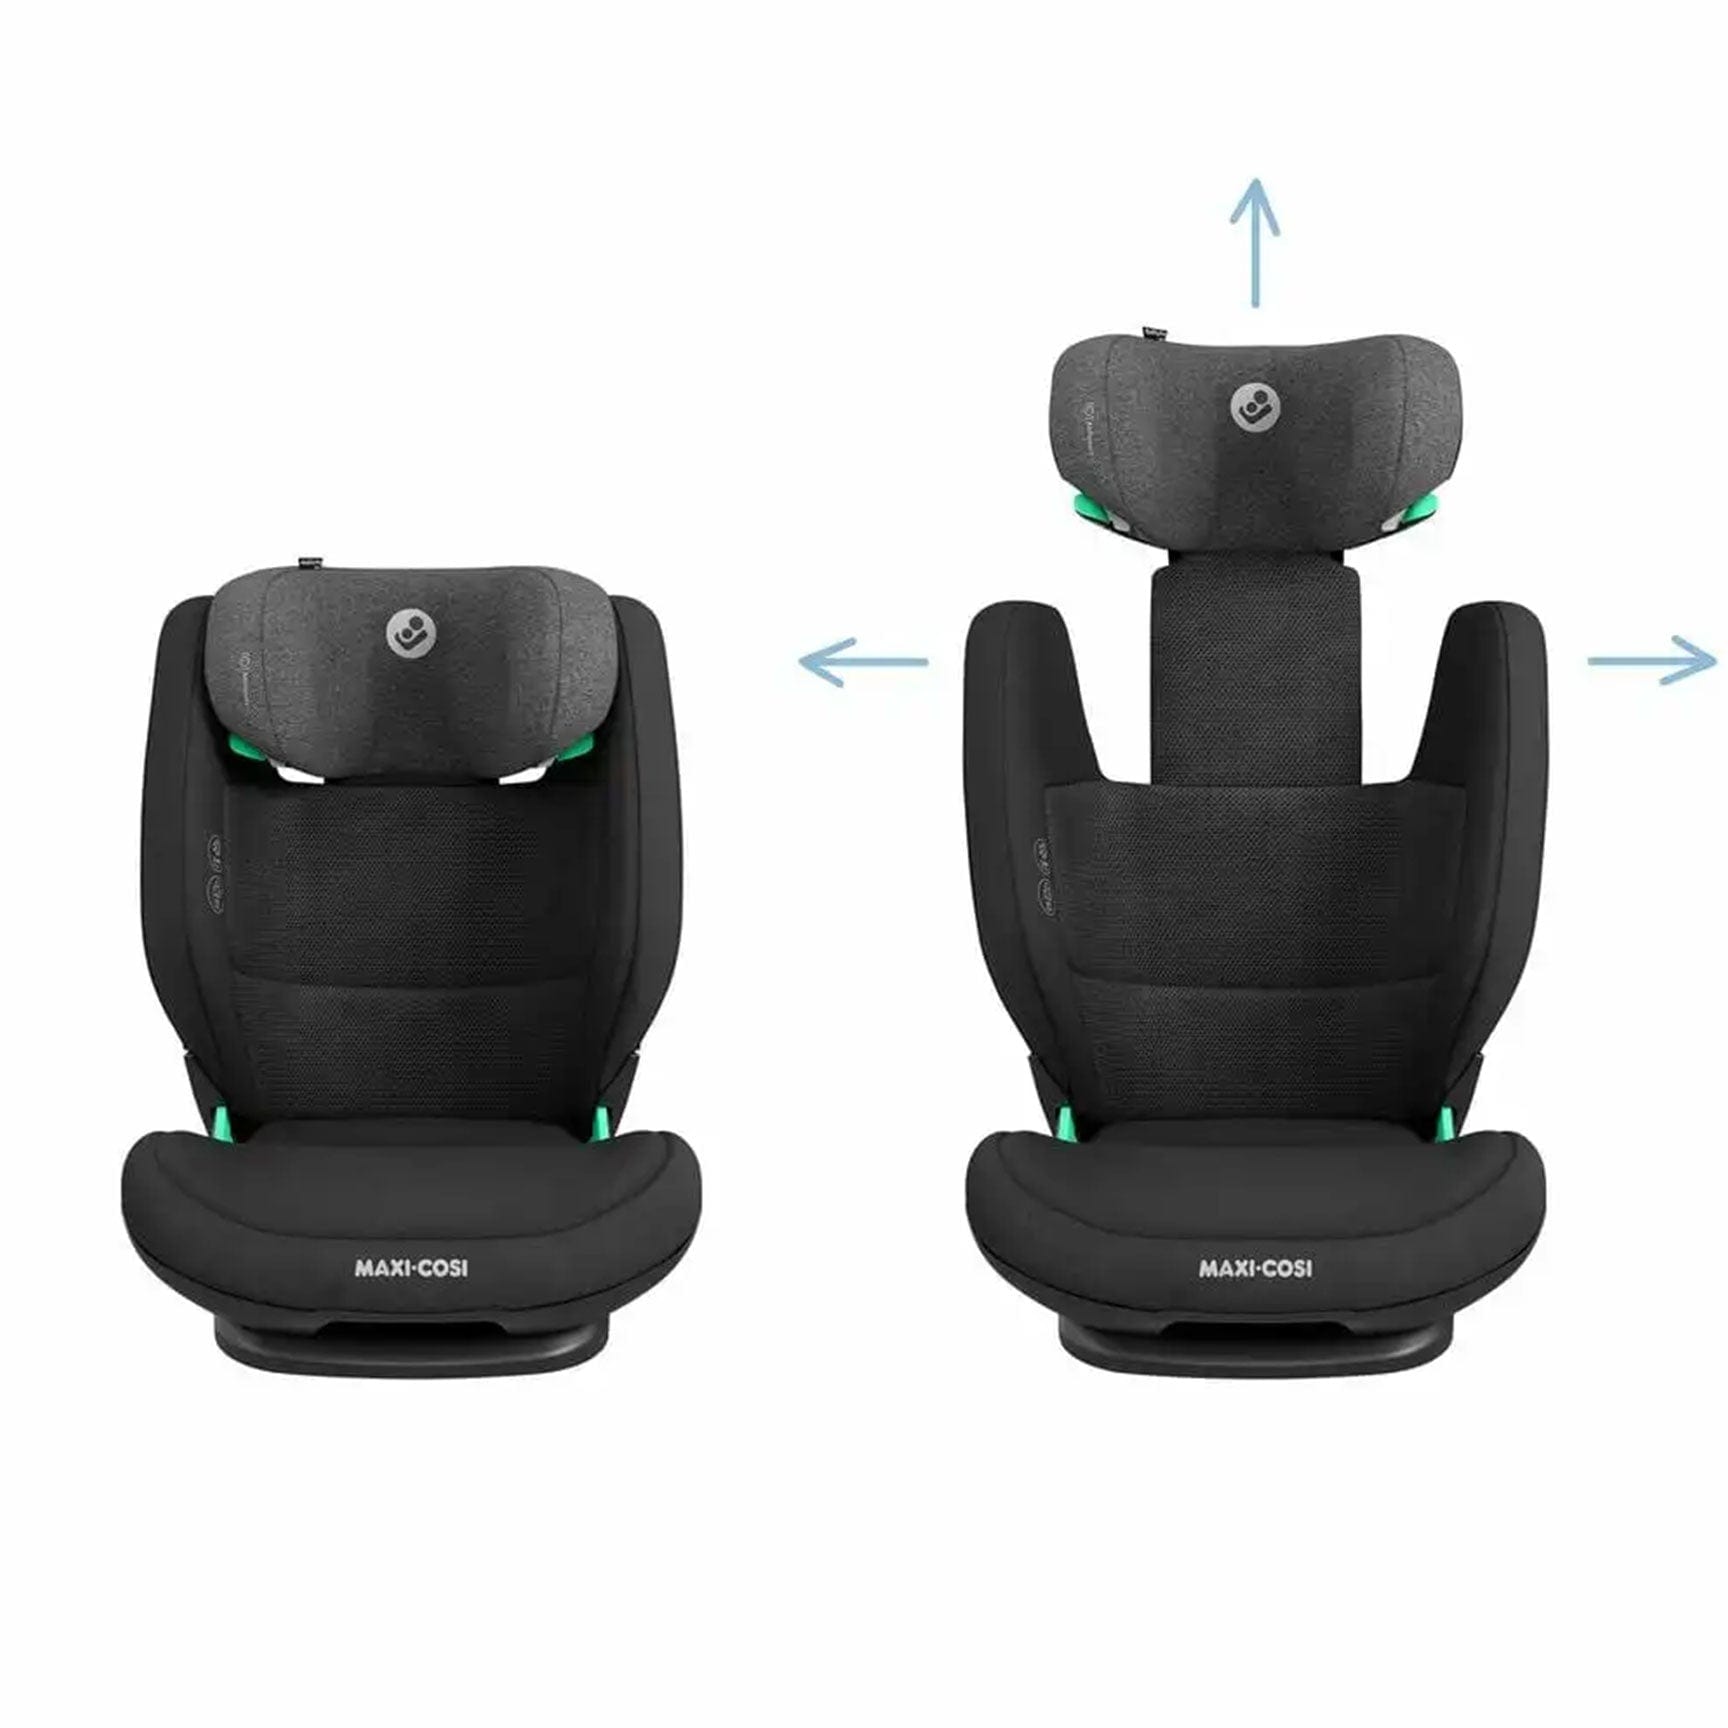 Maxi-Cosi i-Size Car Seats Maxi-Cosi Rodifix Pro i-size Car Seat - Authentic Black 8800671110